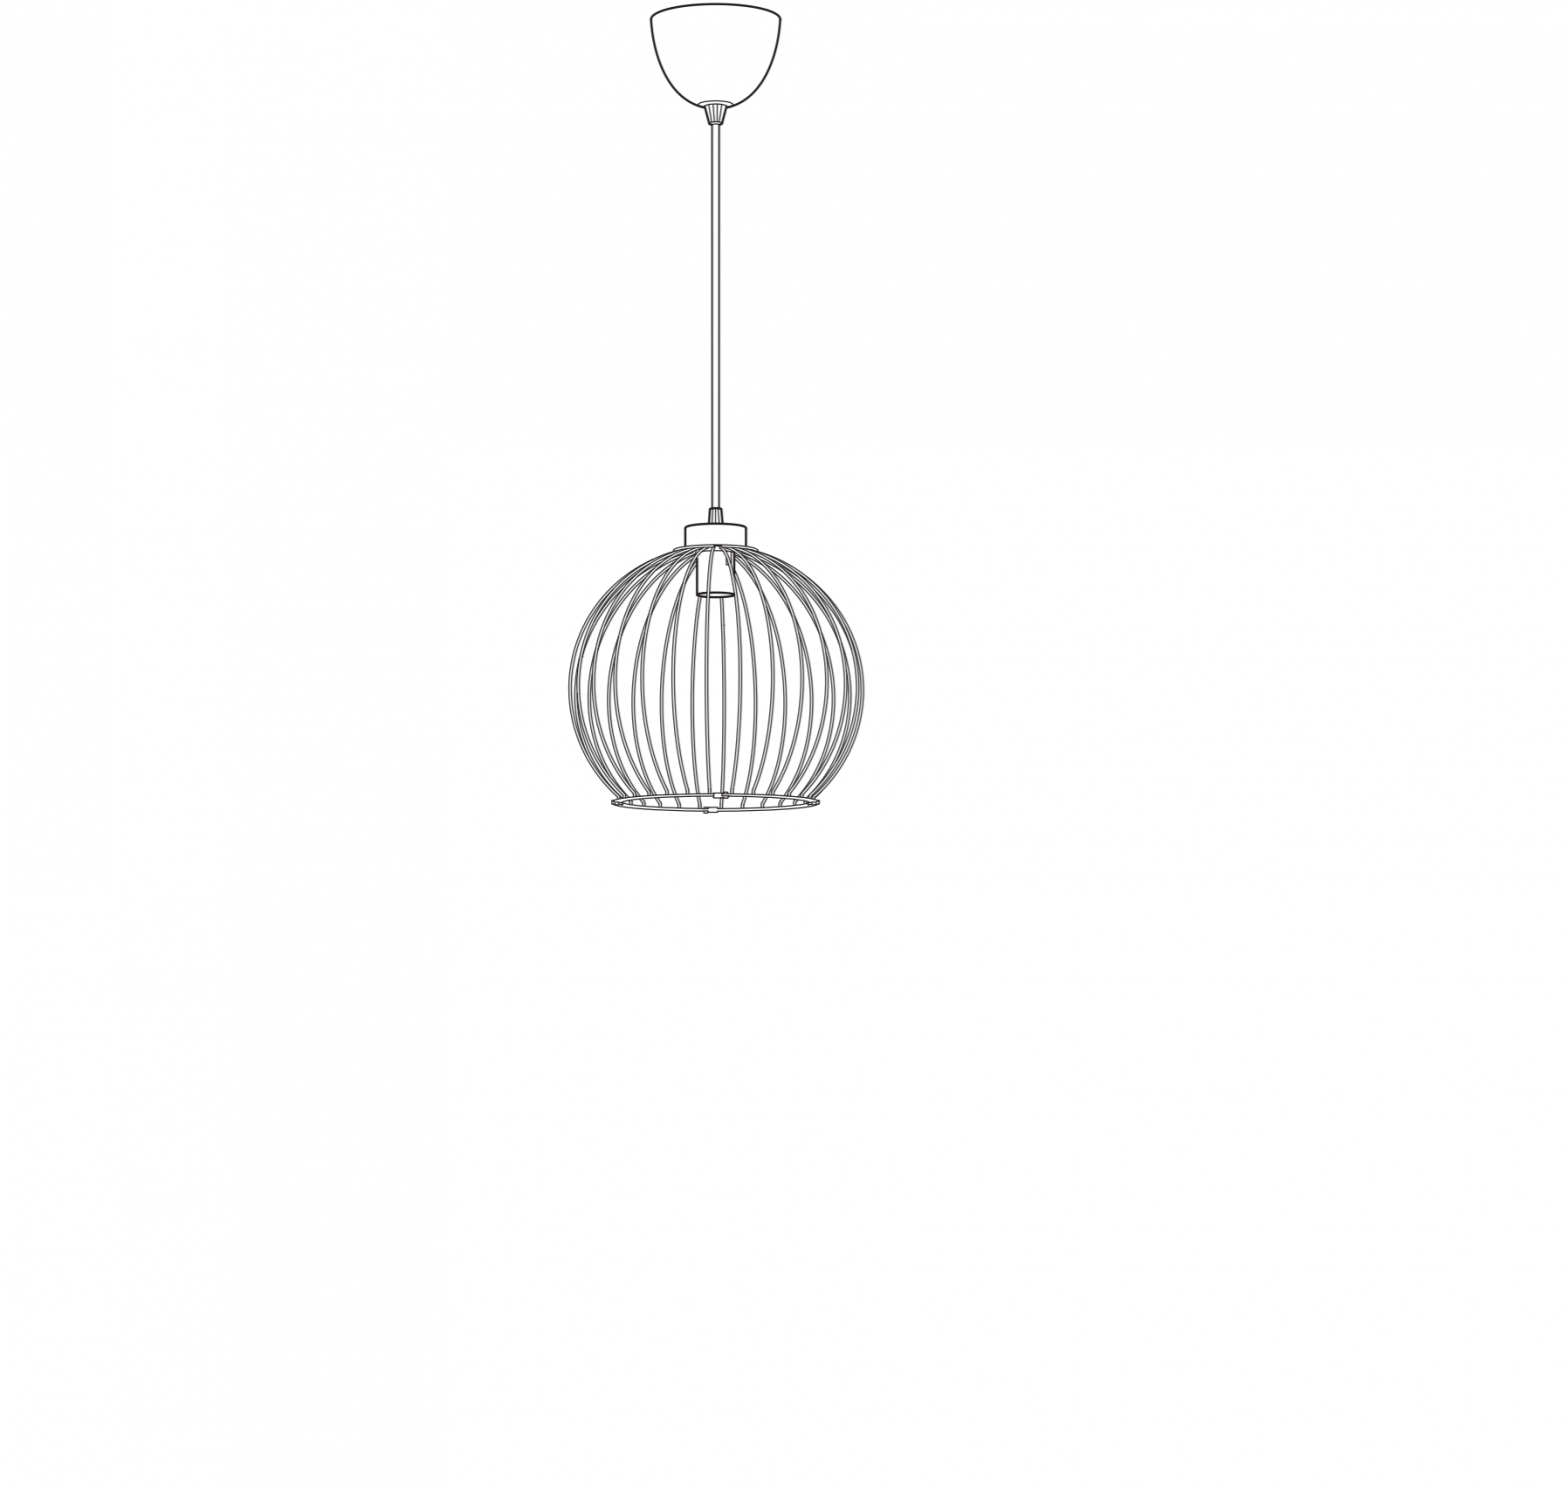 IKEA GRINDFALLET Pendant Lamp Installation Guide